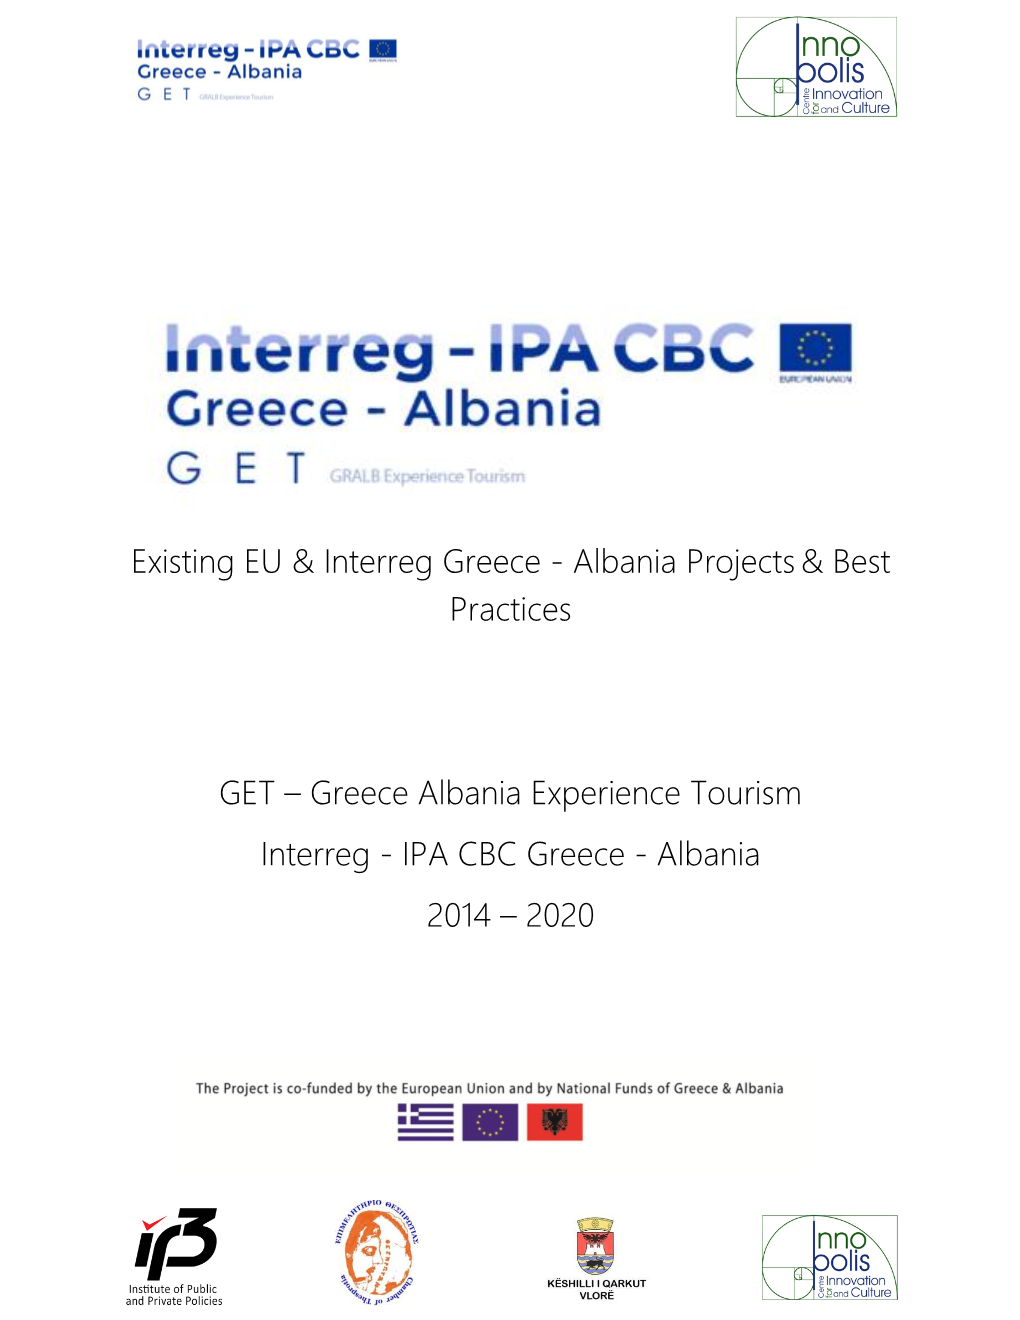 Greece Albania Experience Tourism Interreg - IPA CBC Greece - Albania 2014 – 2020